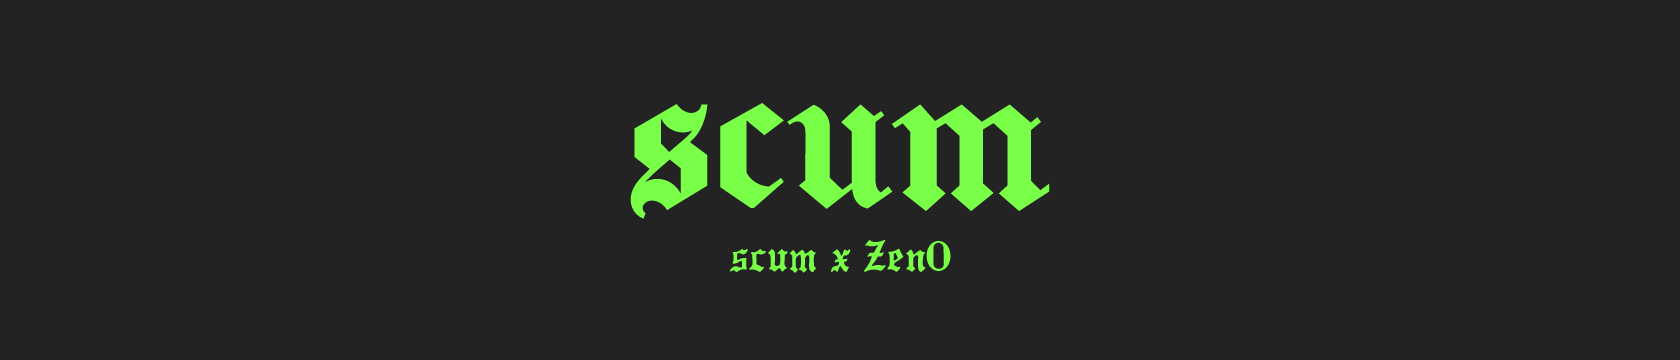 Scum x Zen0 banner